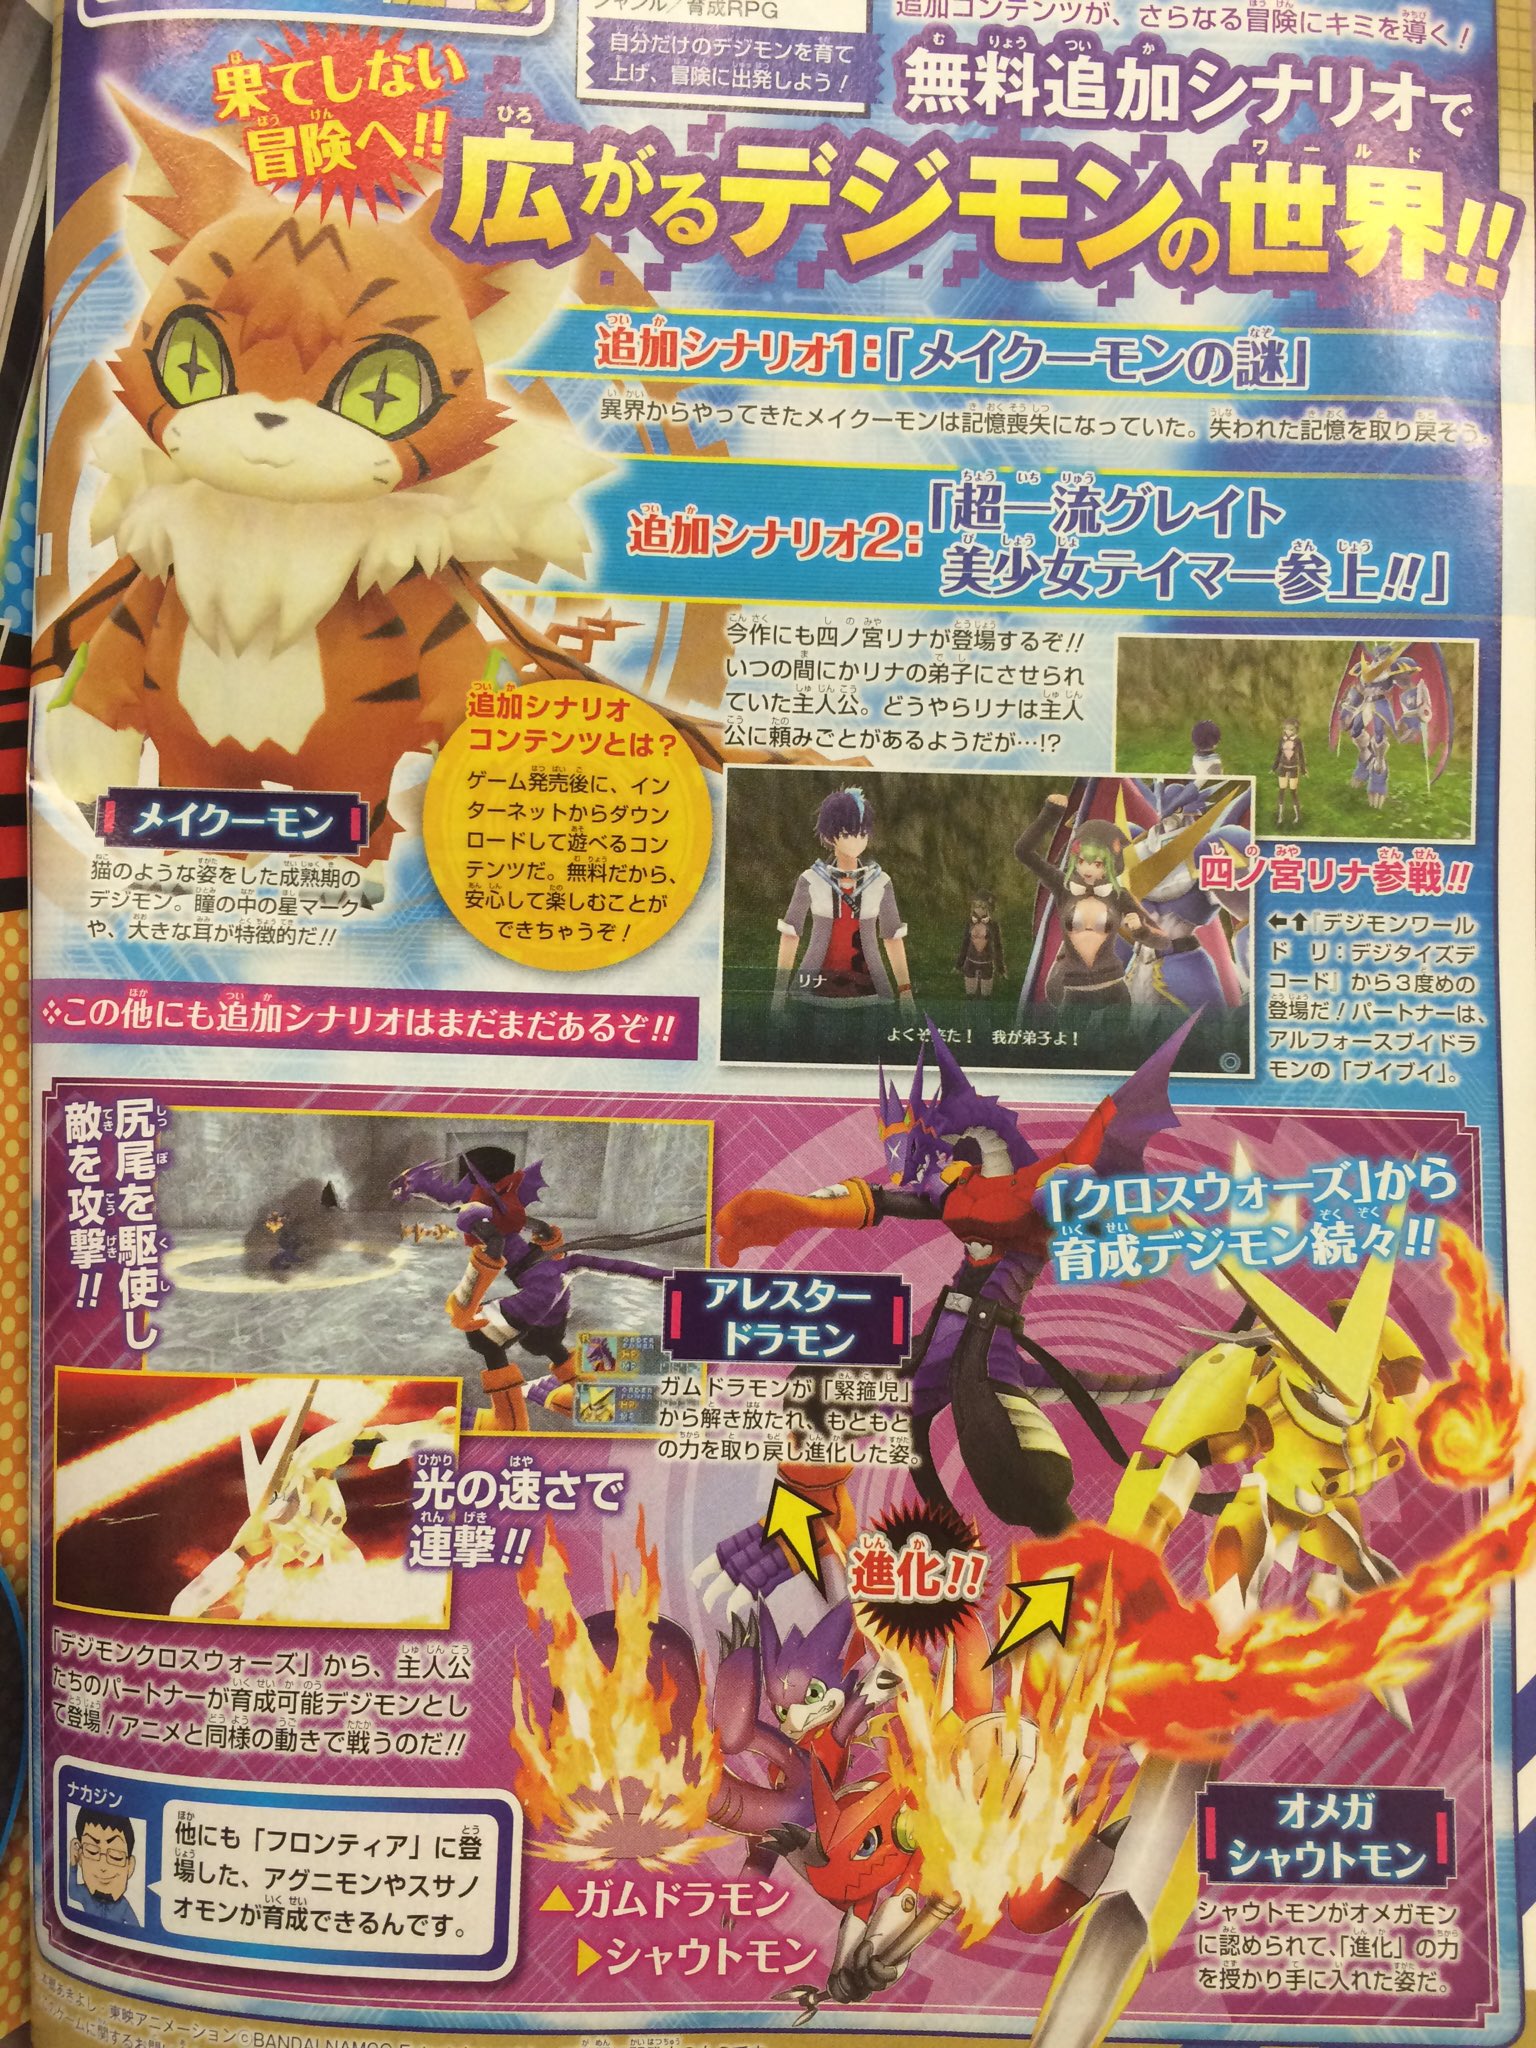 Digimon World: Next Order adds Re:Digitize Decode's Rina Shinomiya 